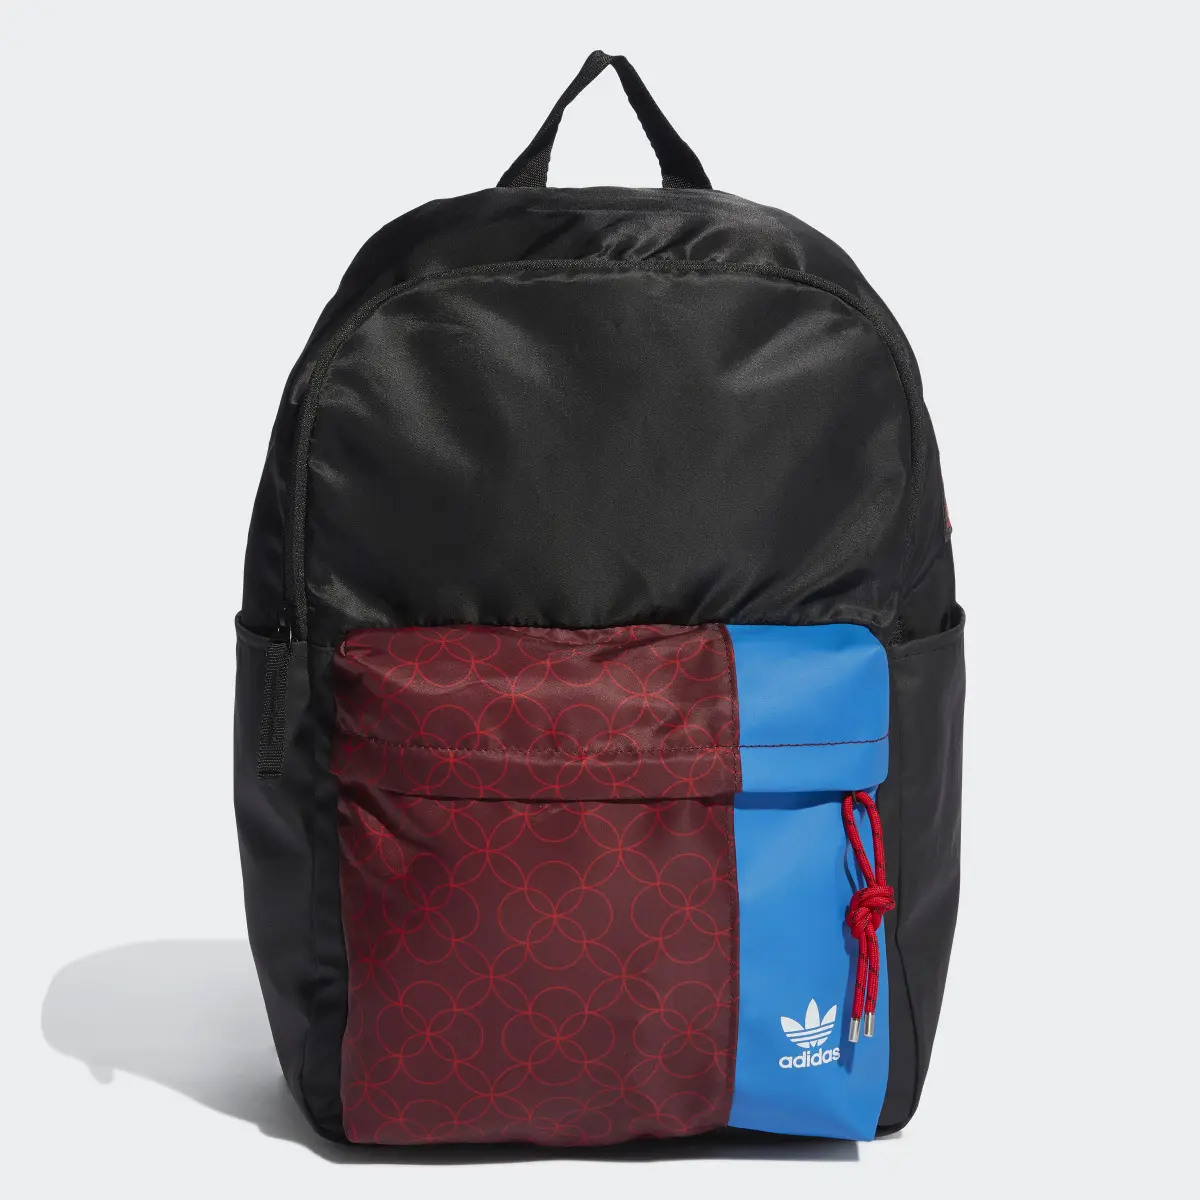 Adidas Backpack. 1